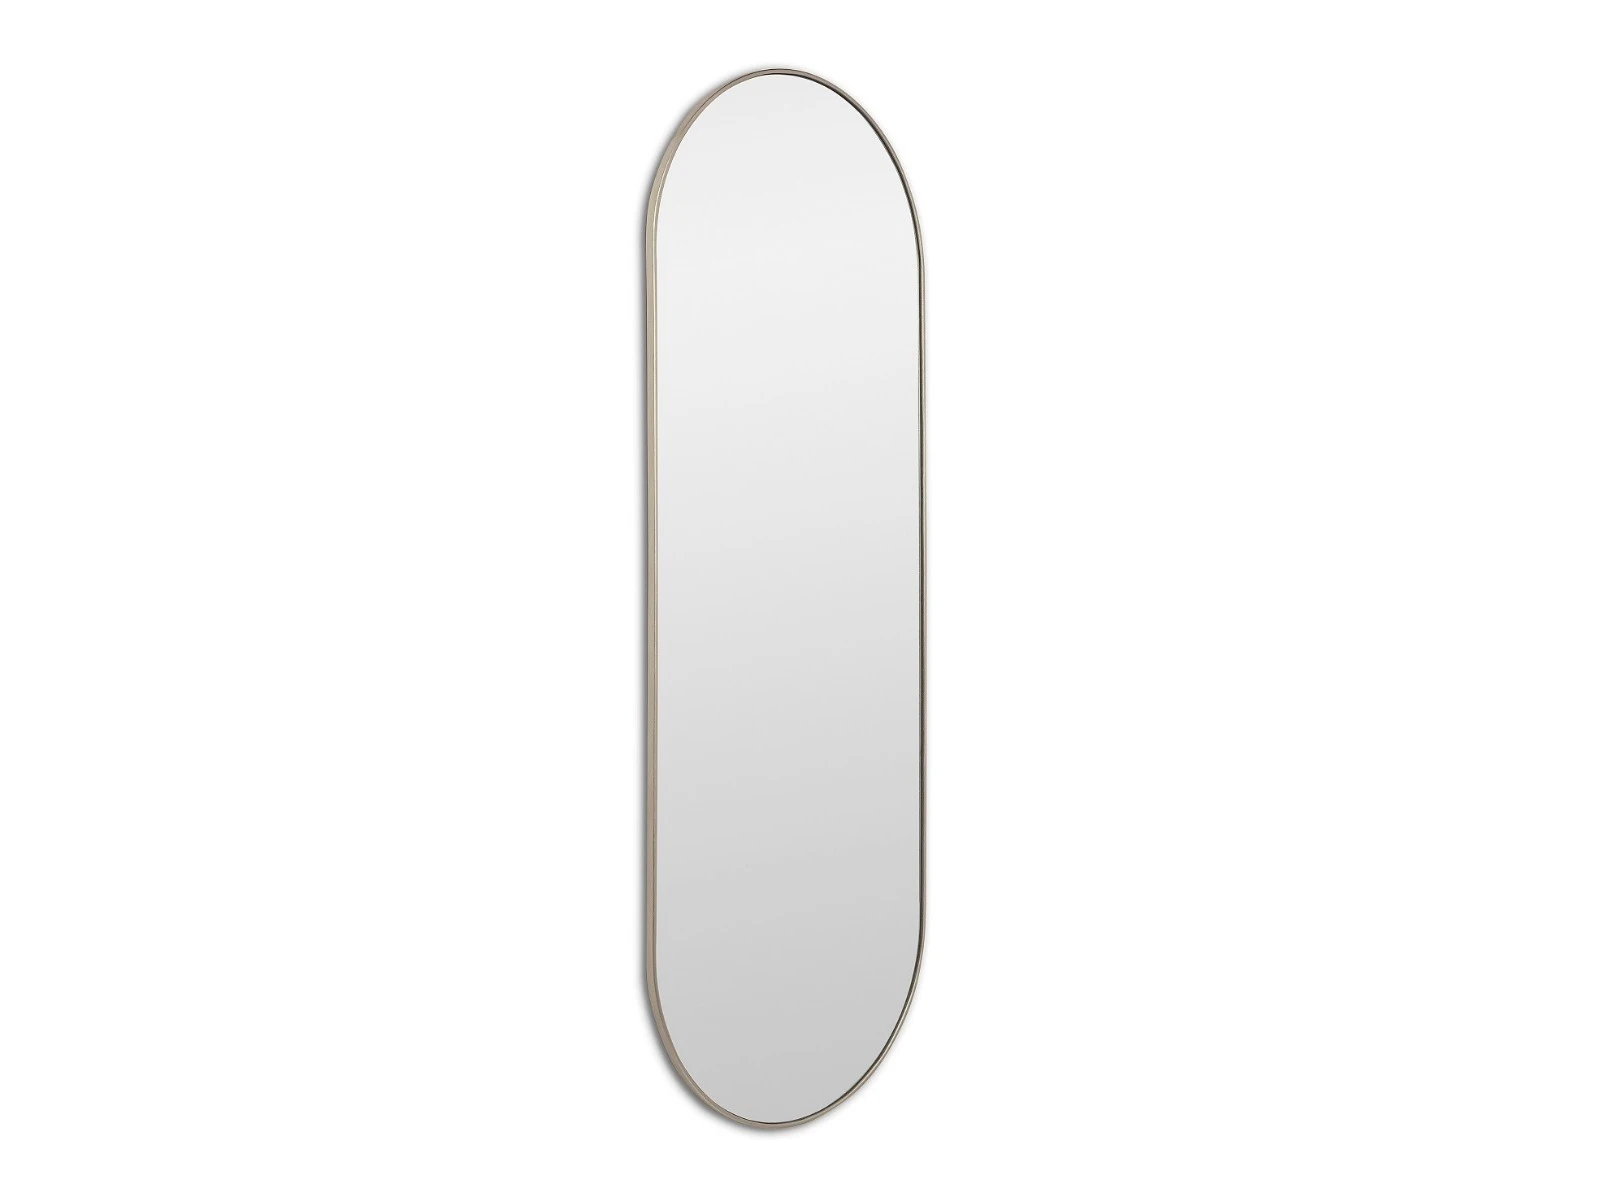 Овальное зеркало Kapsel XL Silver 877453